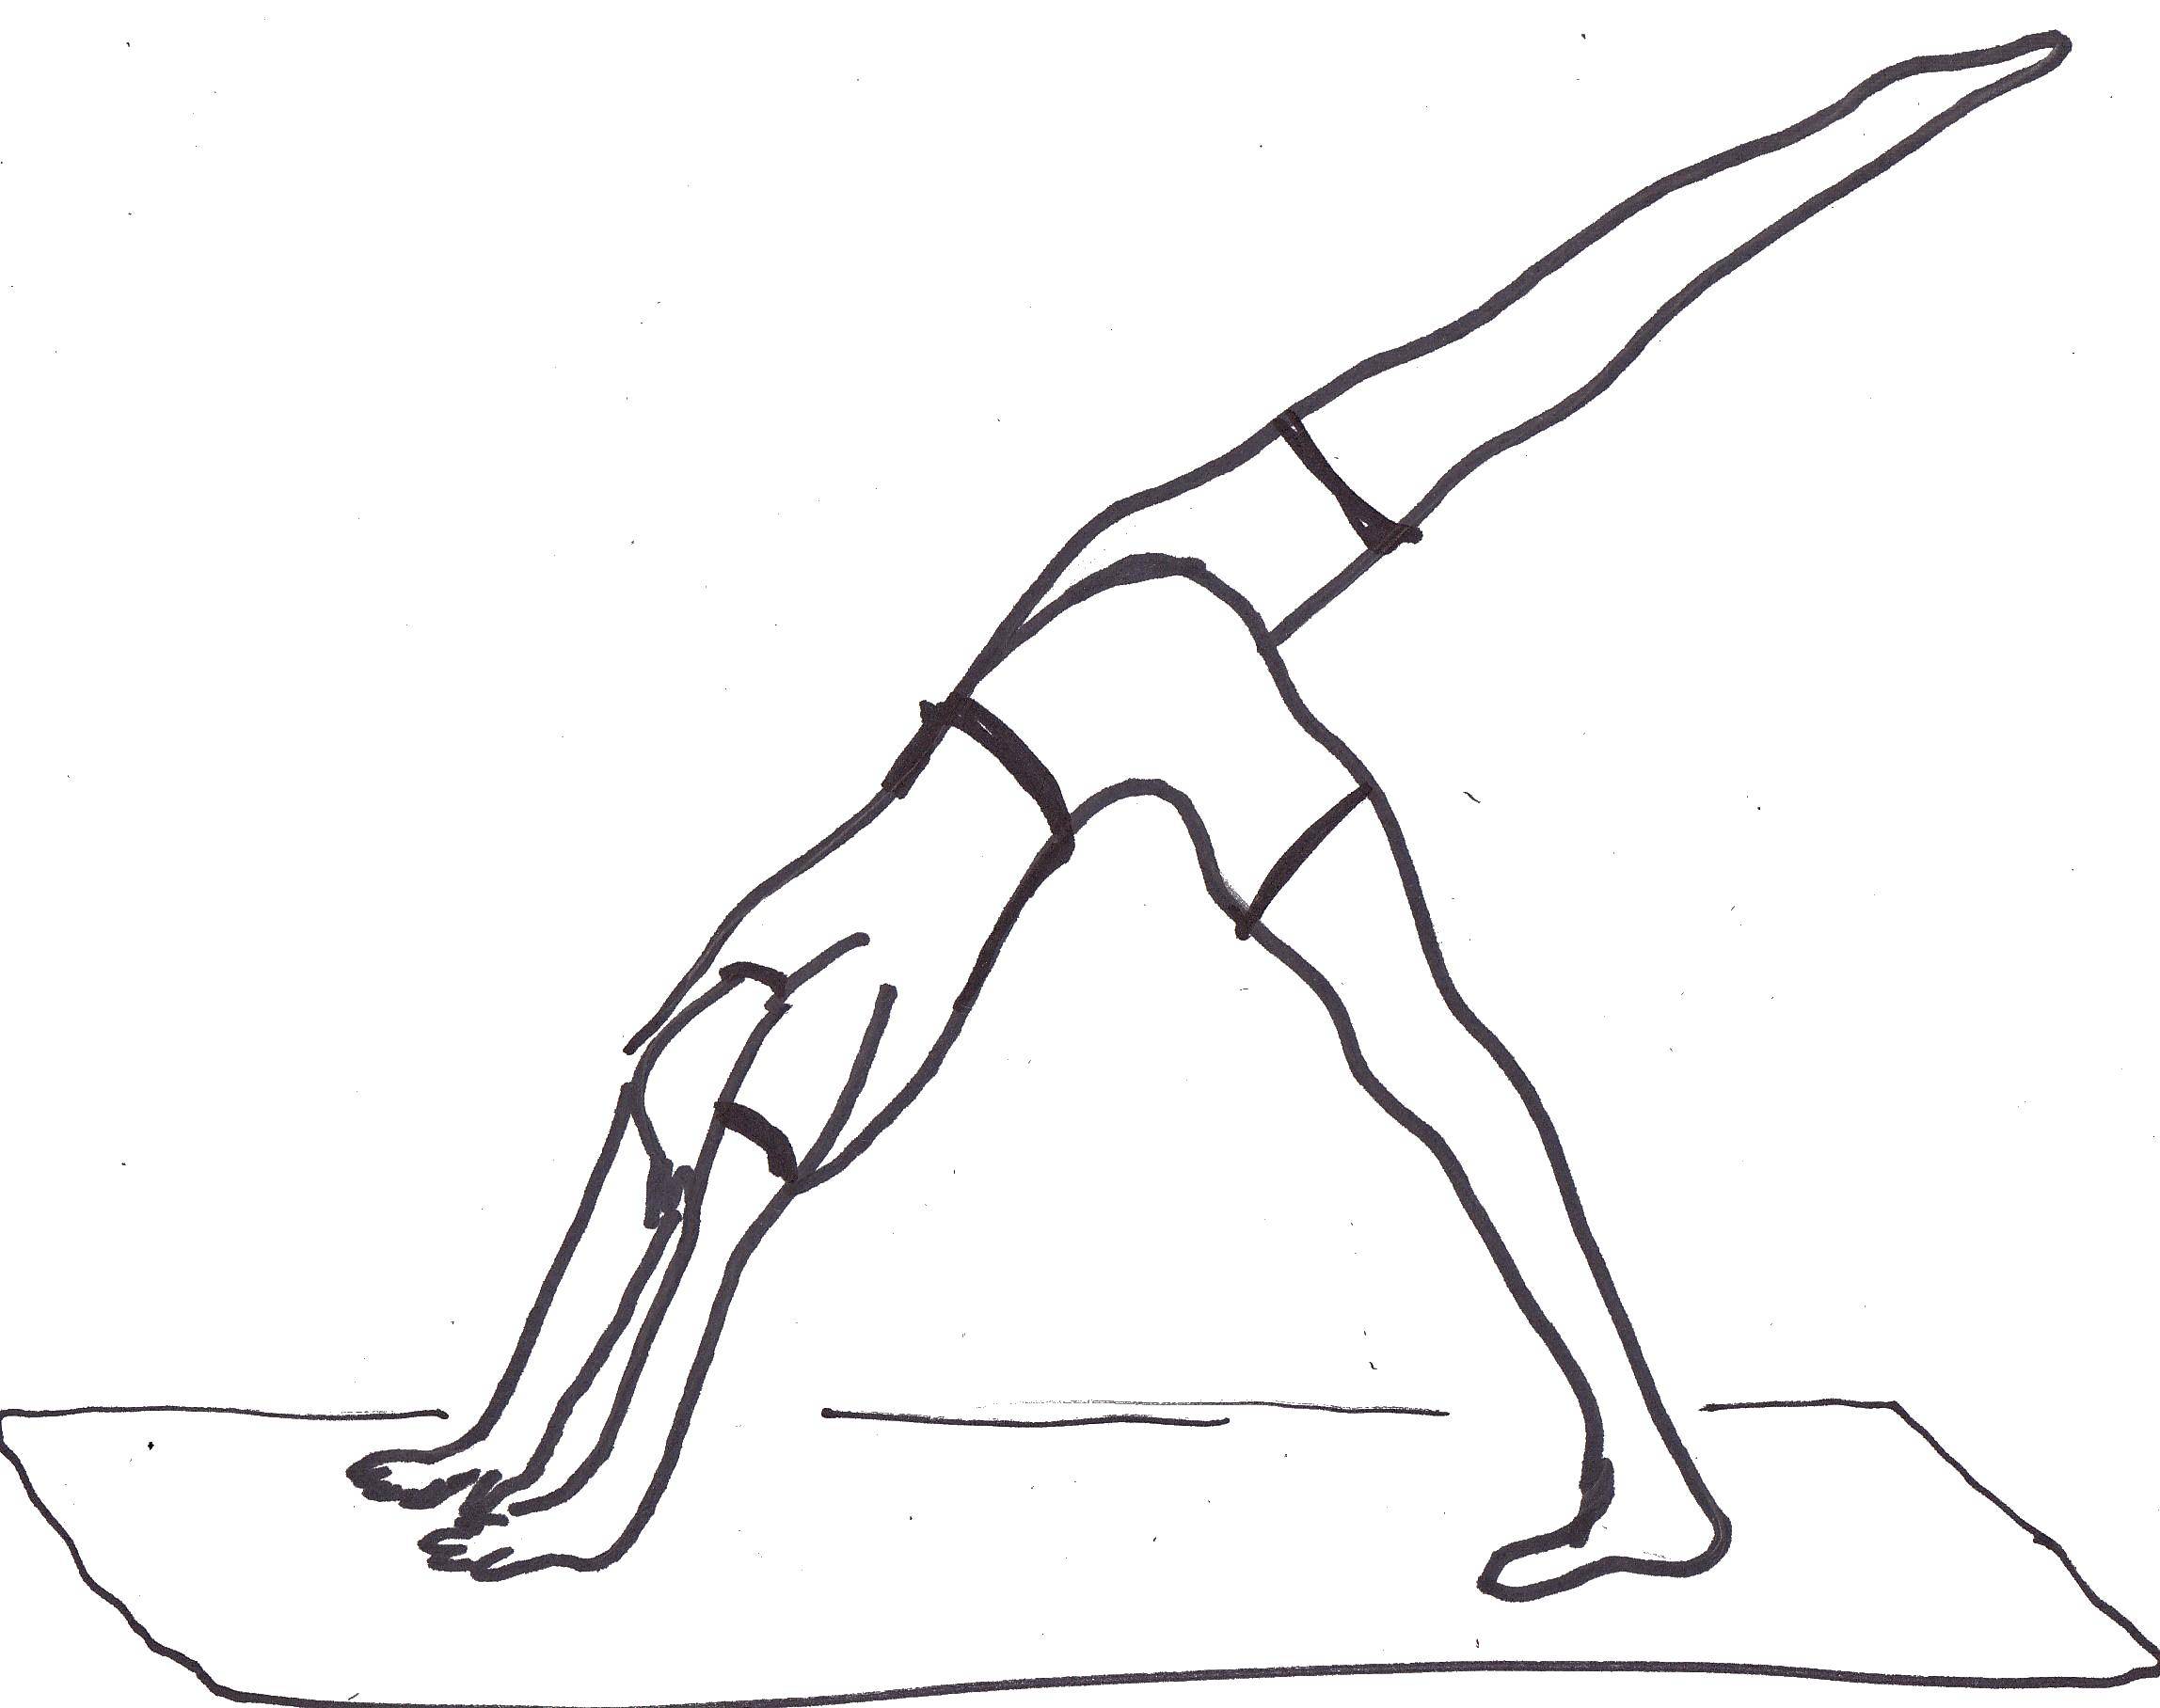 Coloring Girl doing exercises. Category yoga. Tags:  yoga girl.